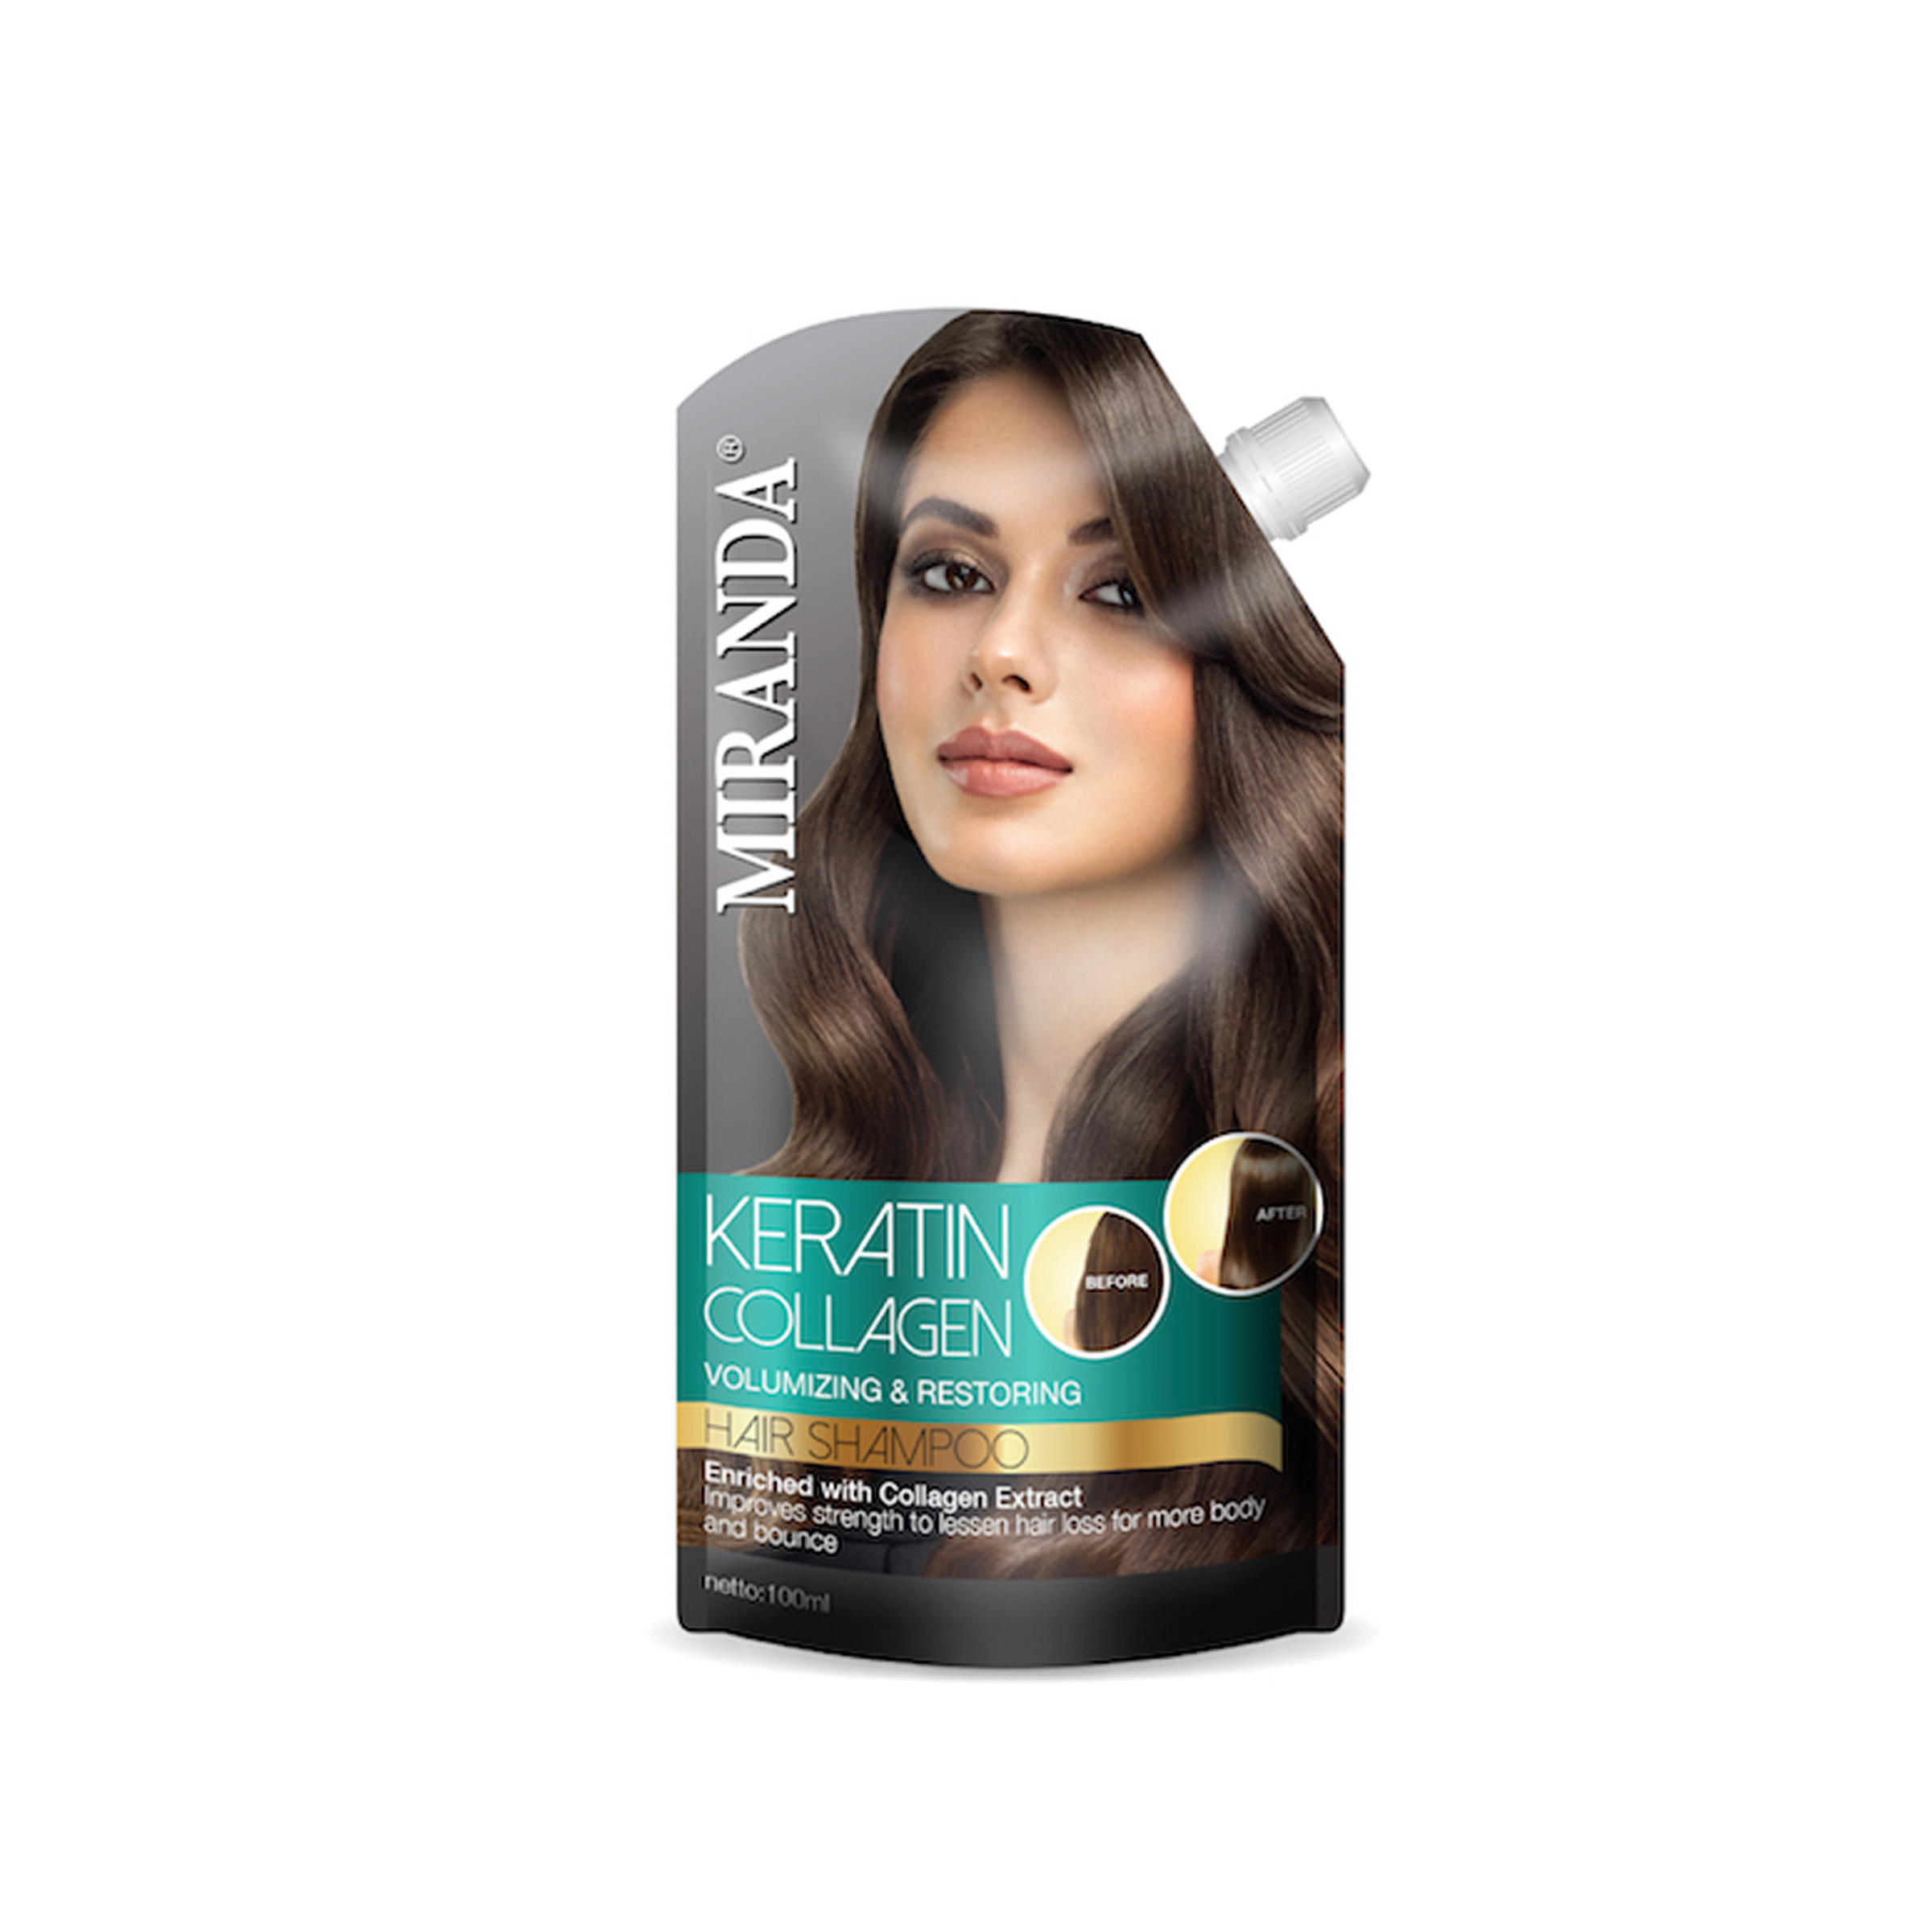 Miranda Keratin Collagen Hair Shampoo 100 ml / Shampoo Colagen